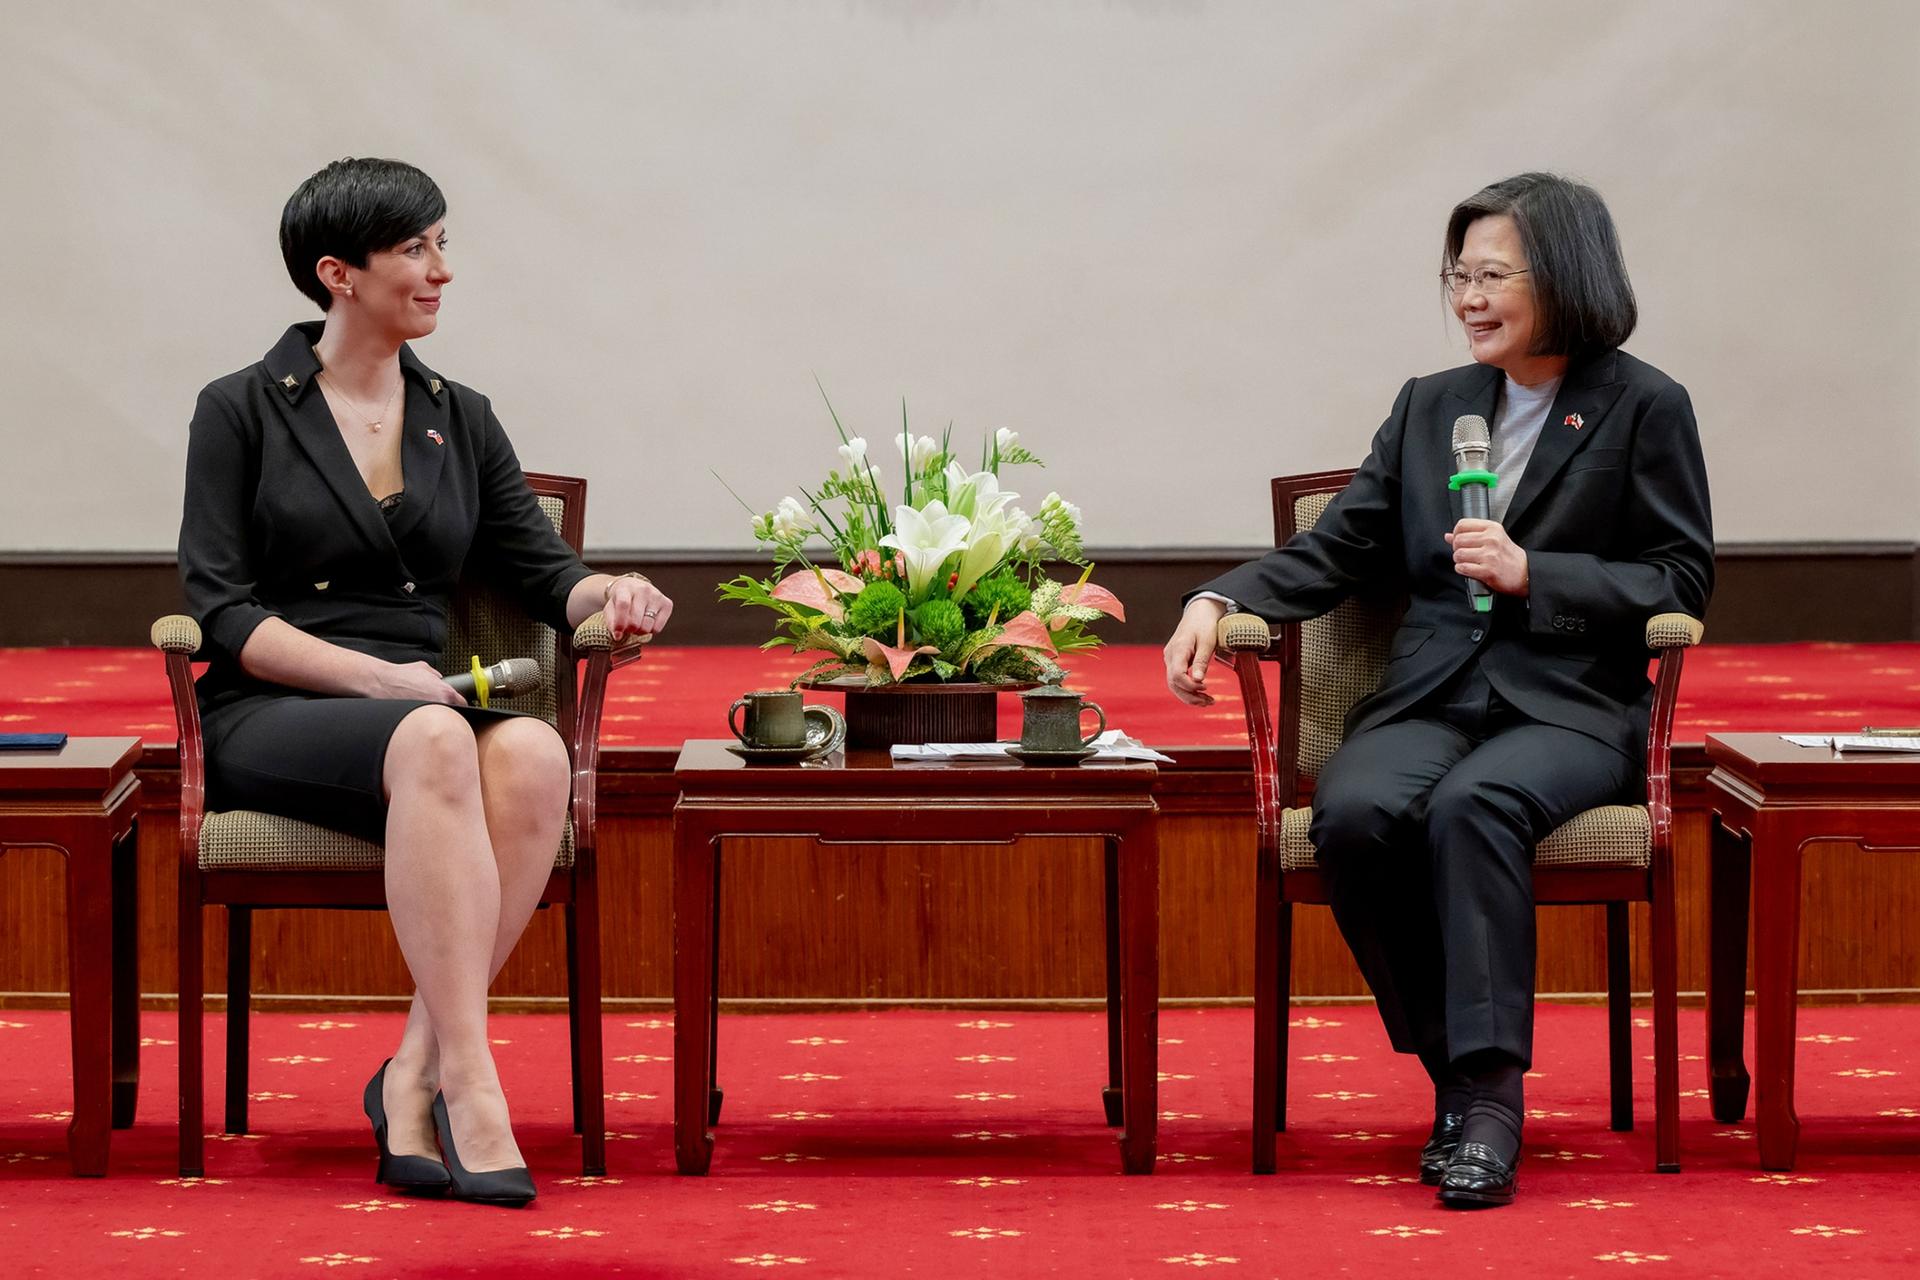 Taiwan's President Tsai Ing-wen, right, speaks with Czech Speaker of the Chamber of Deputies Marketa Pekarova Adamova on red carpeting, both wearing black suits.